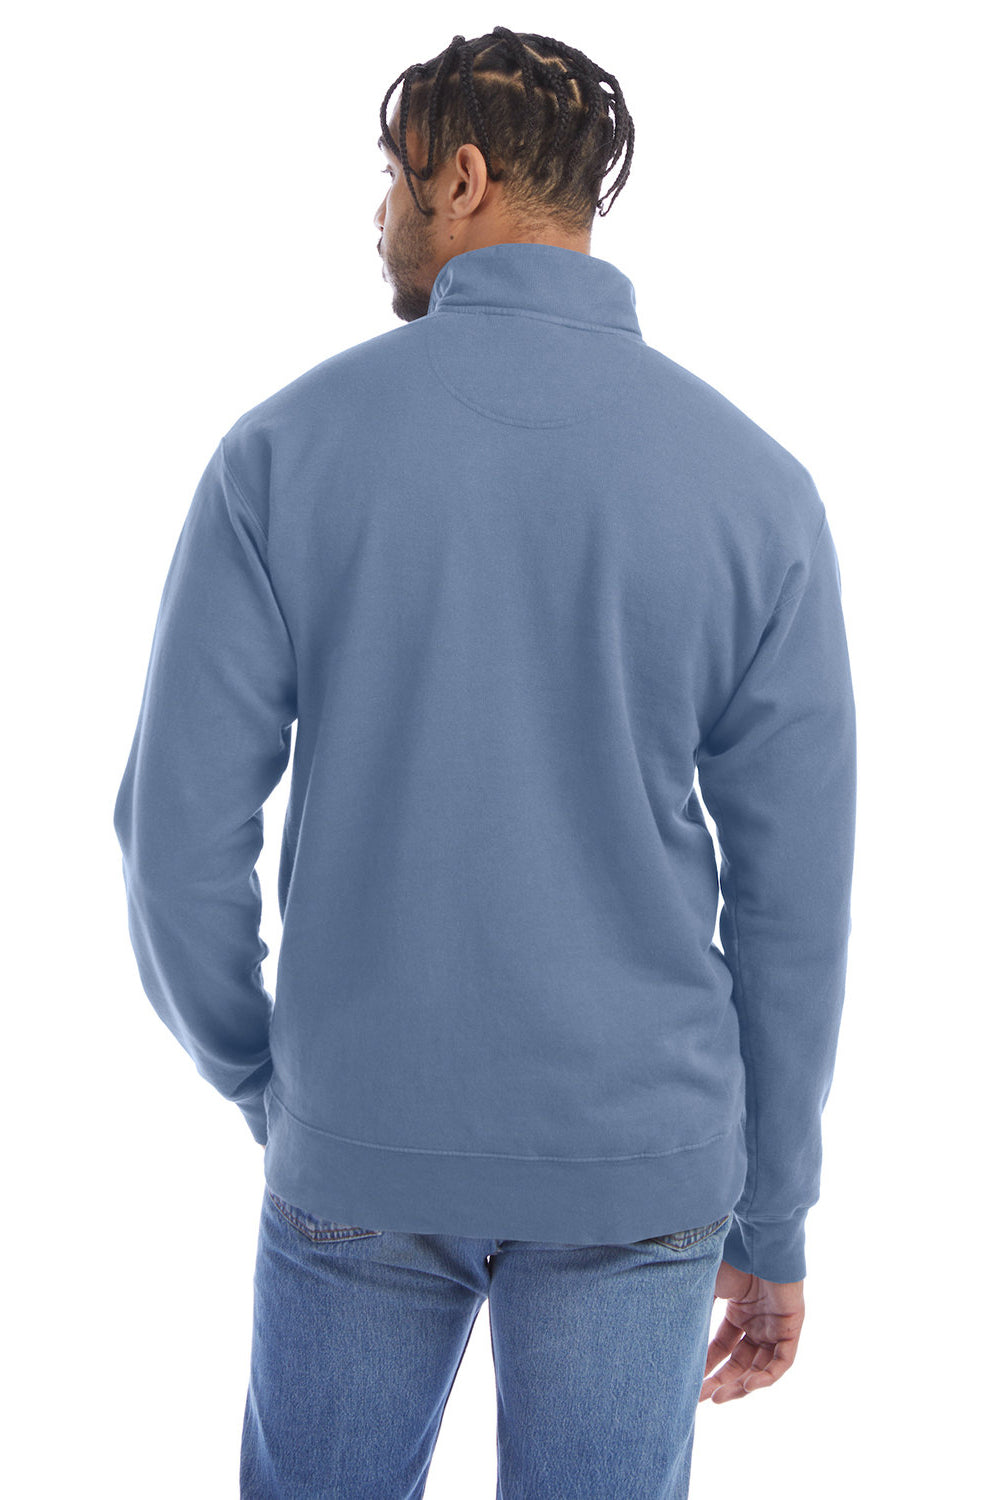 ComfortWash by Hanes GDH425 Mens 1/4 Zip Sweatshirt Saltwater Blue Back